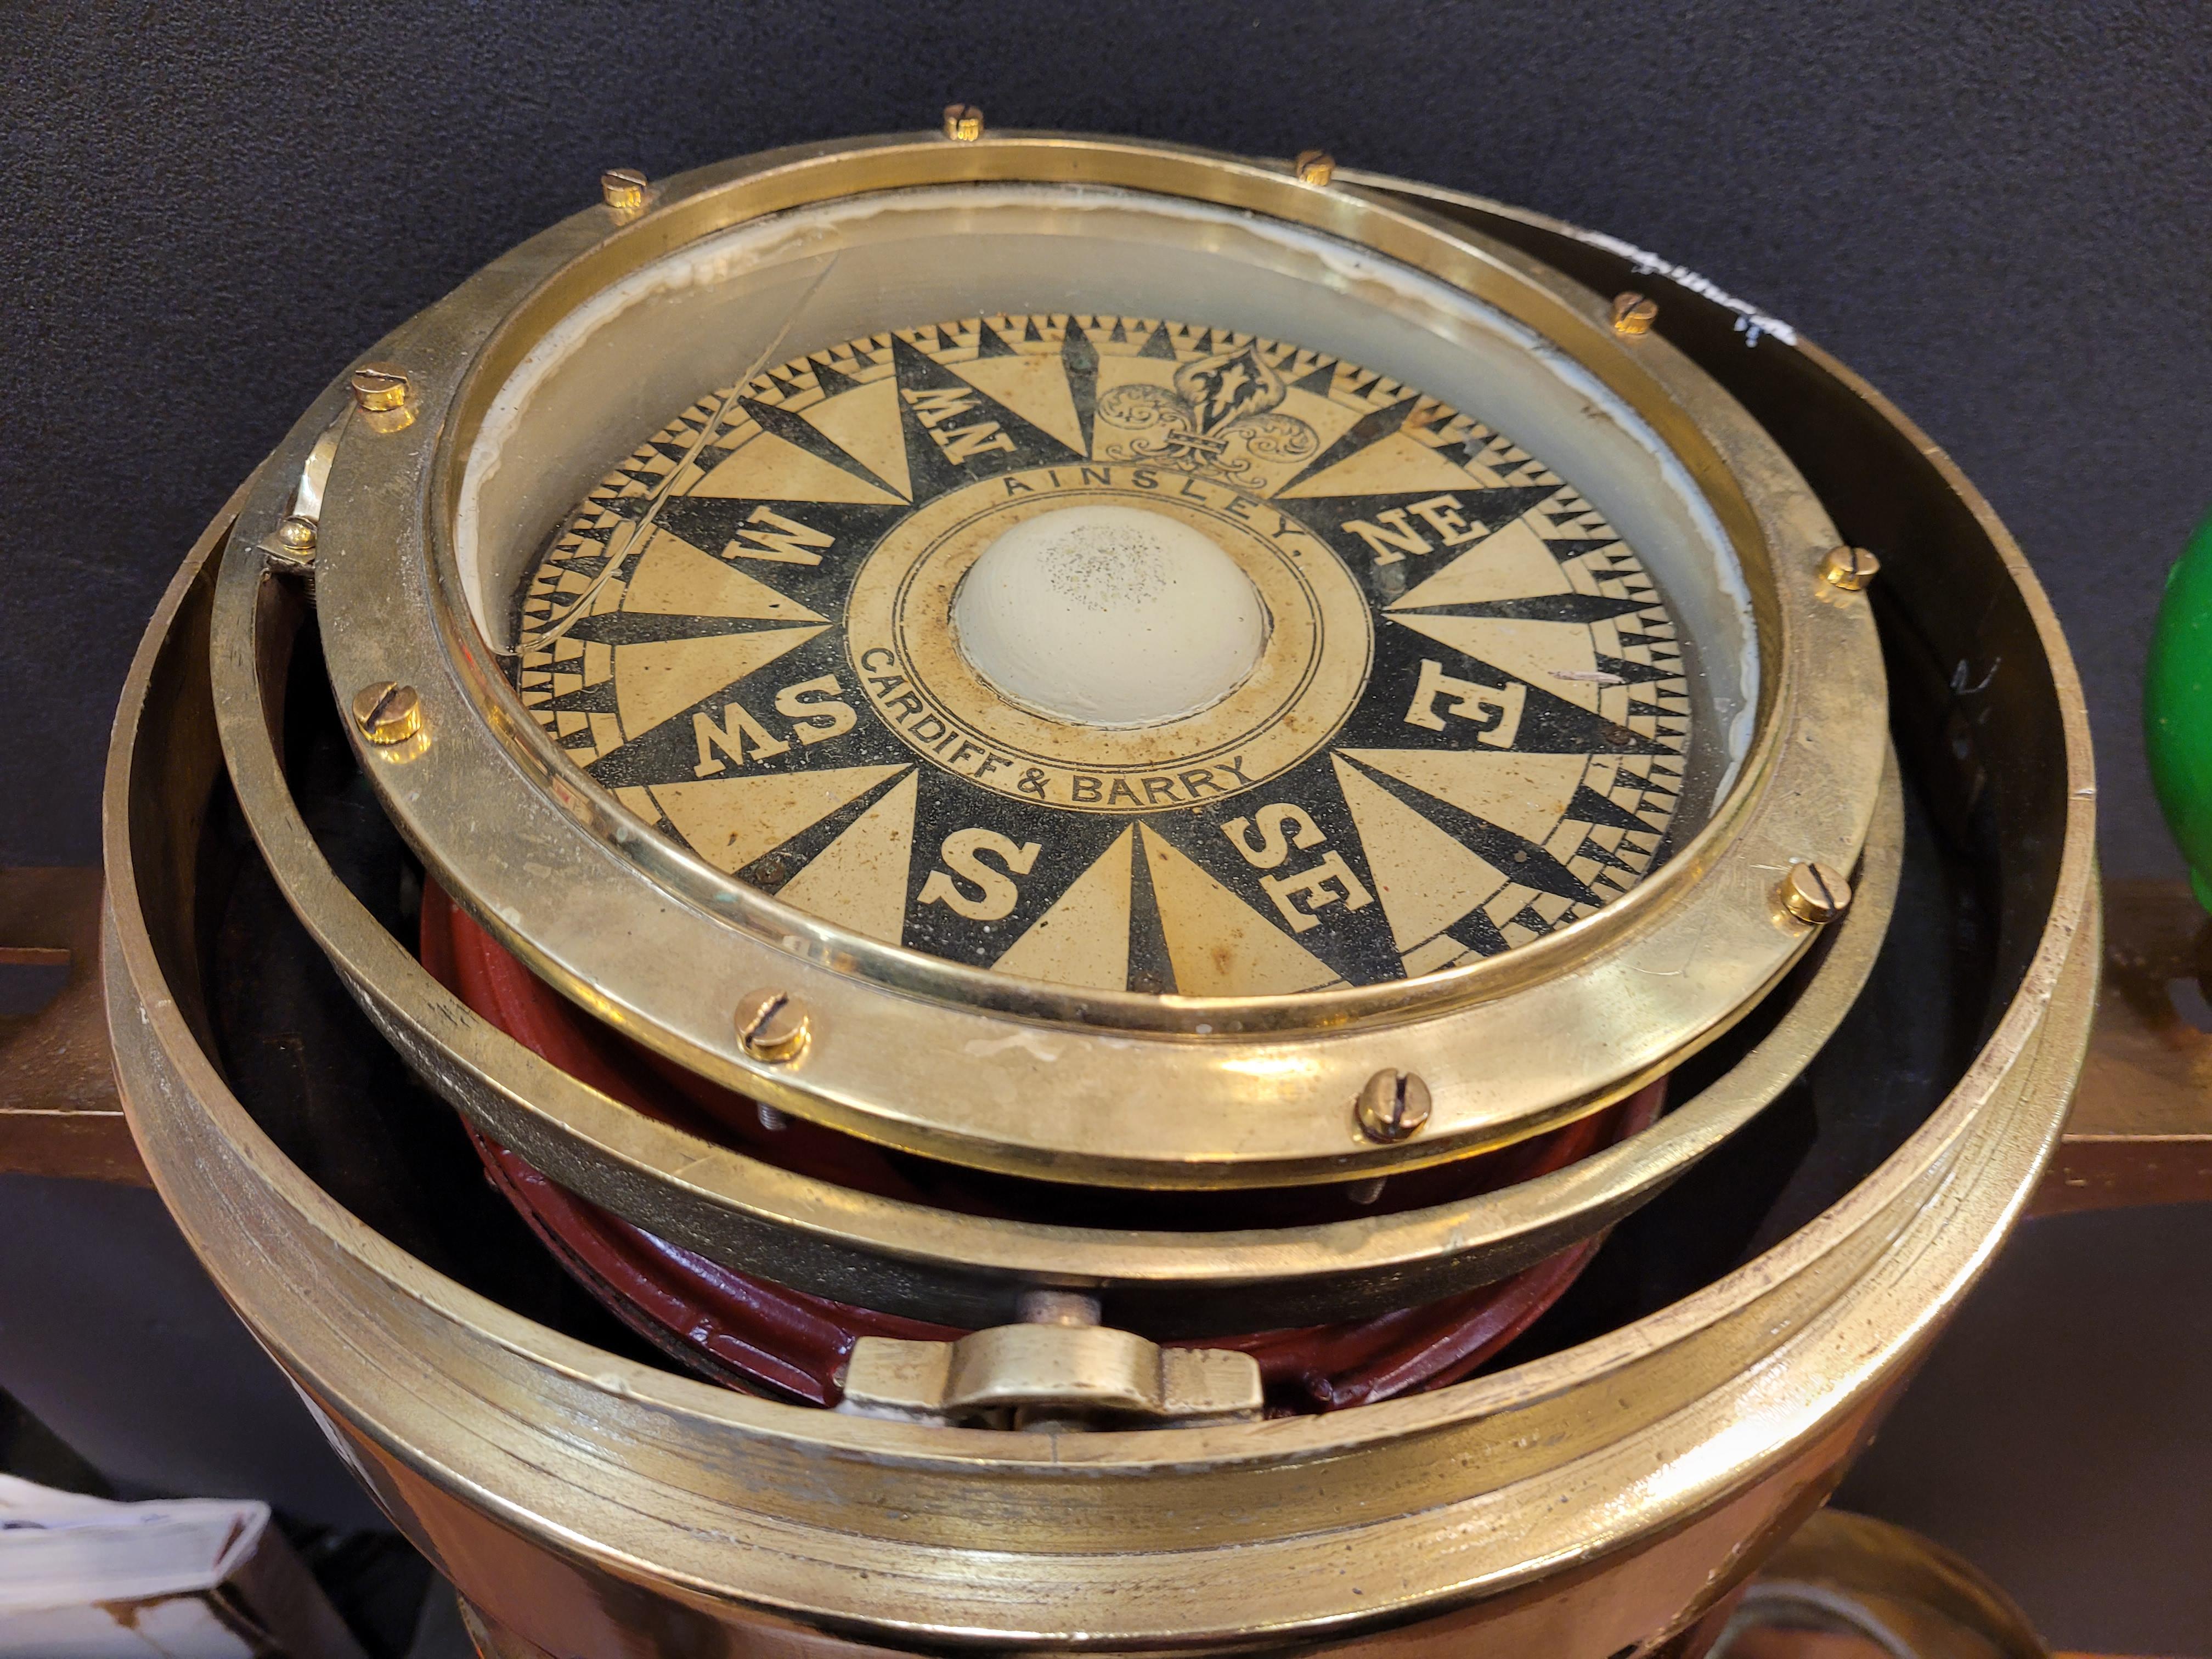 English Compass Ship's log, 40's, teak and brass, 19th century compass. XIX 2